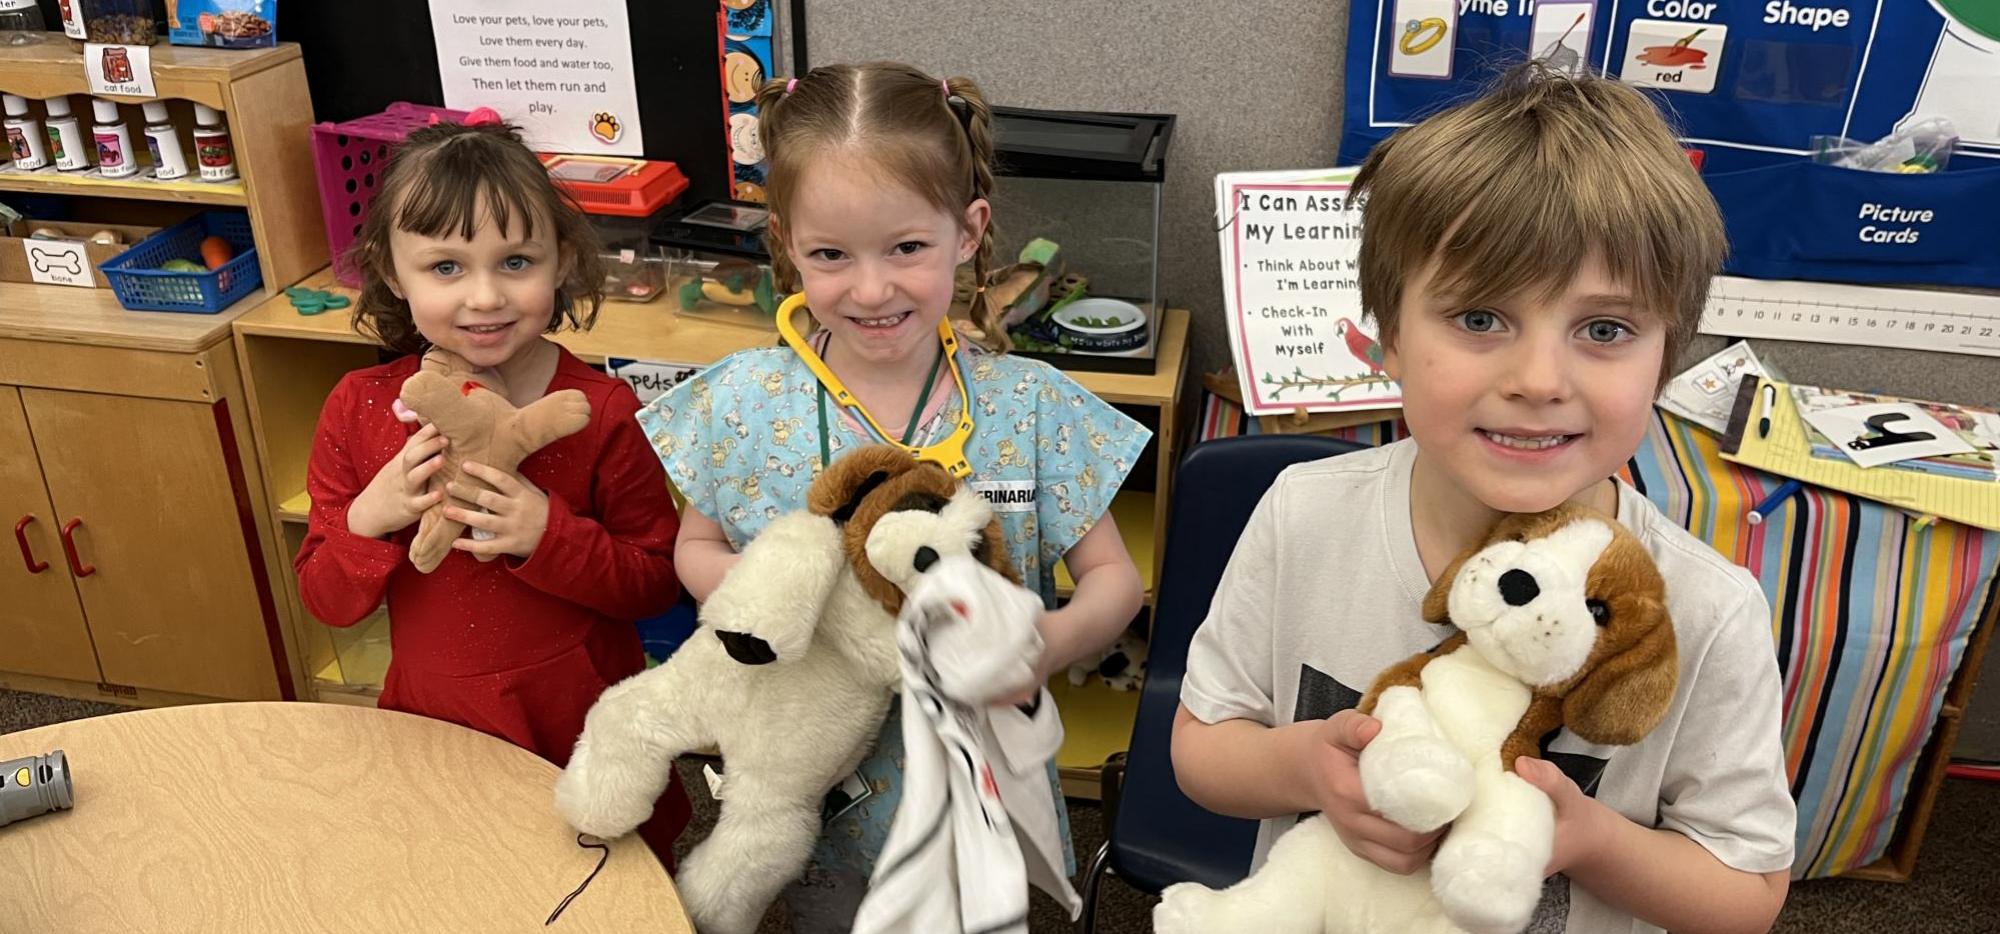 Preschoolers with stuffed animals